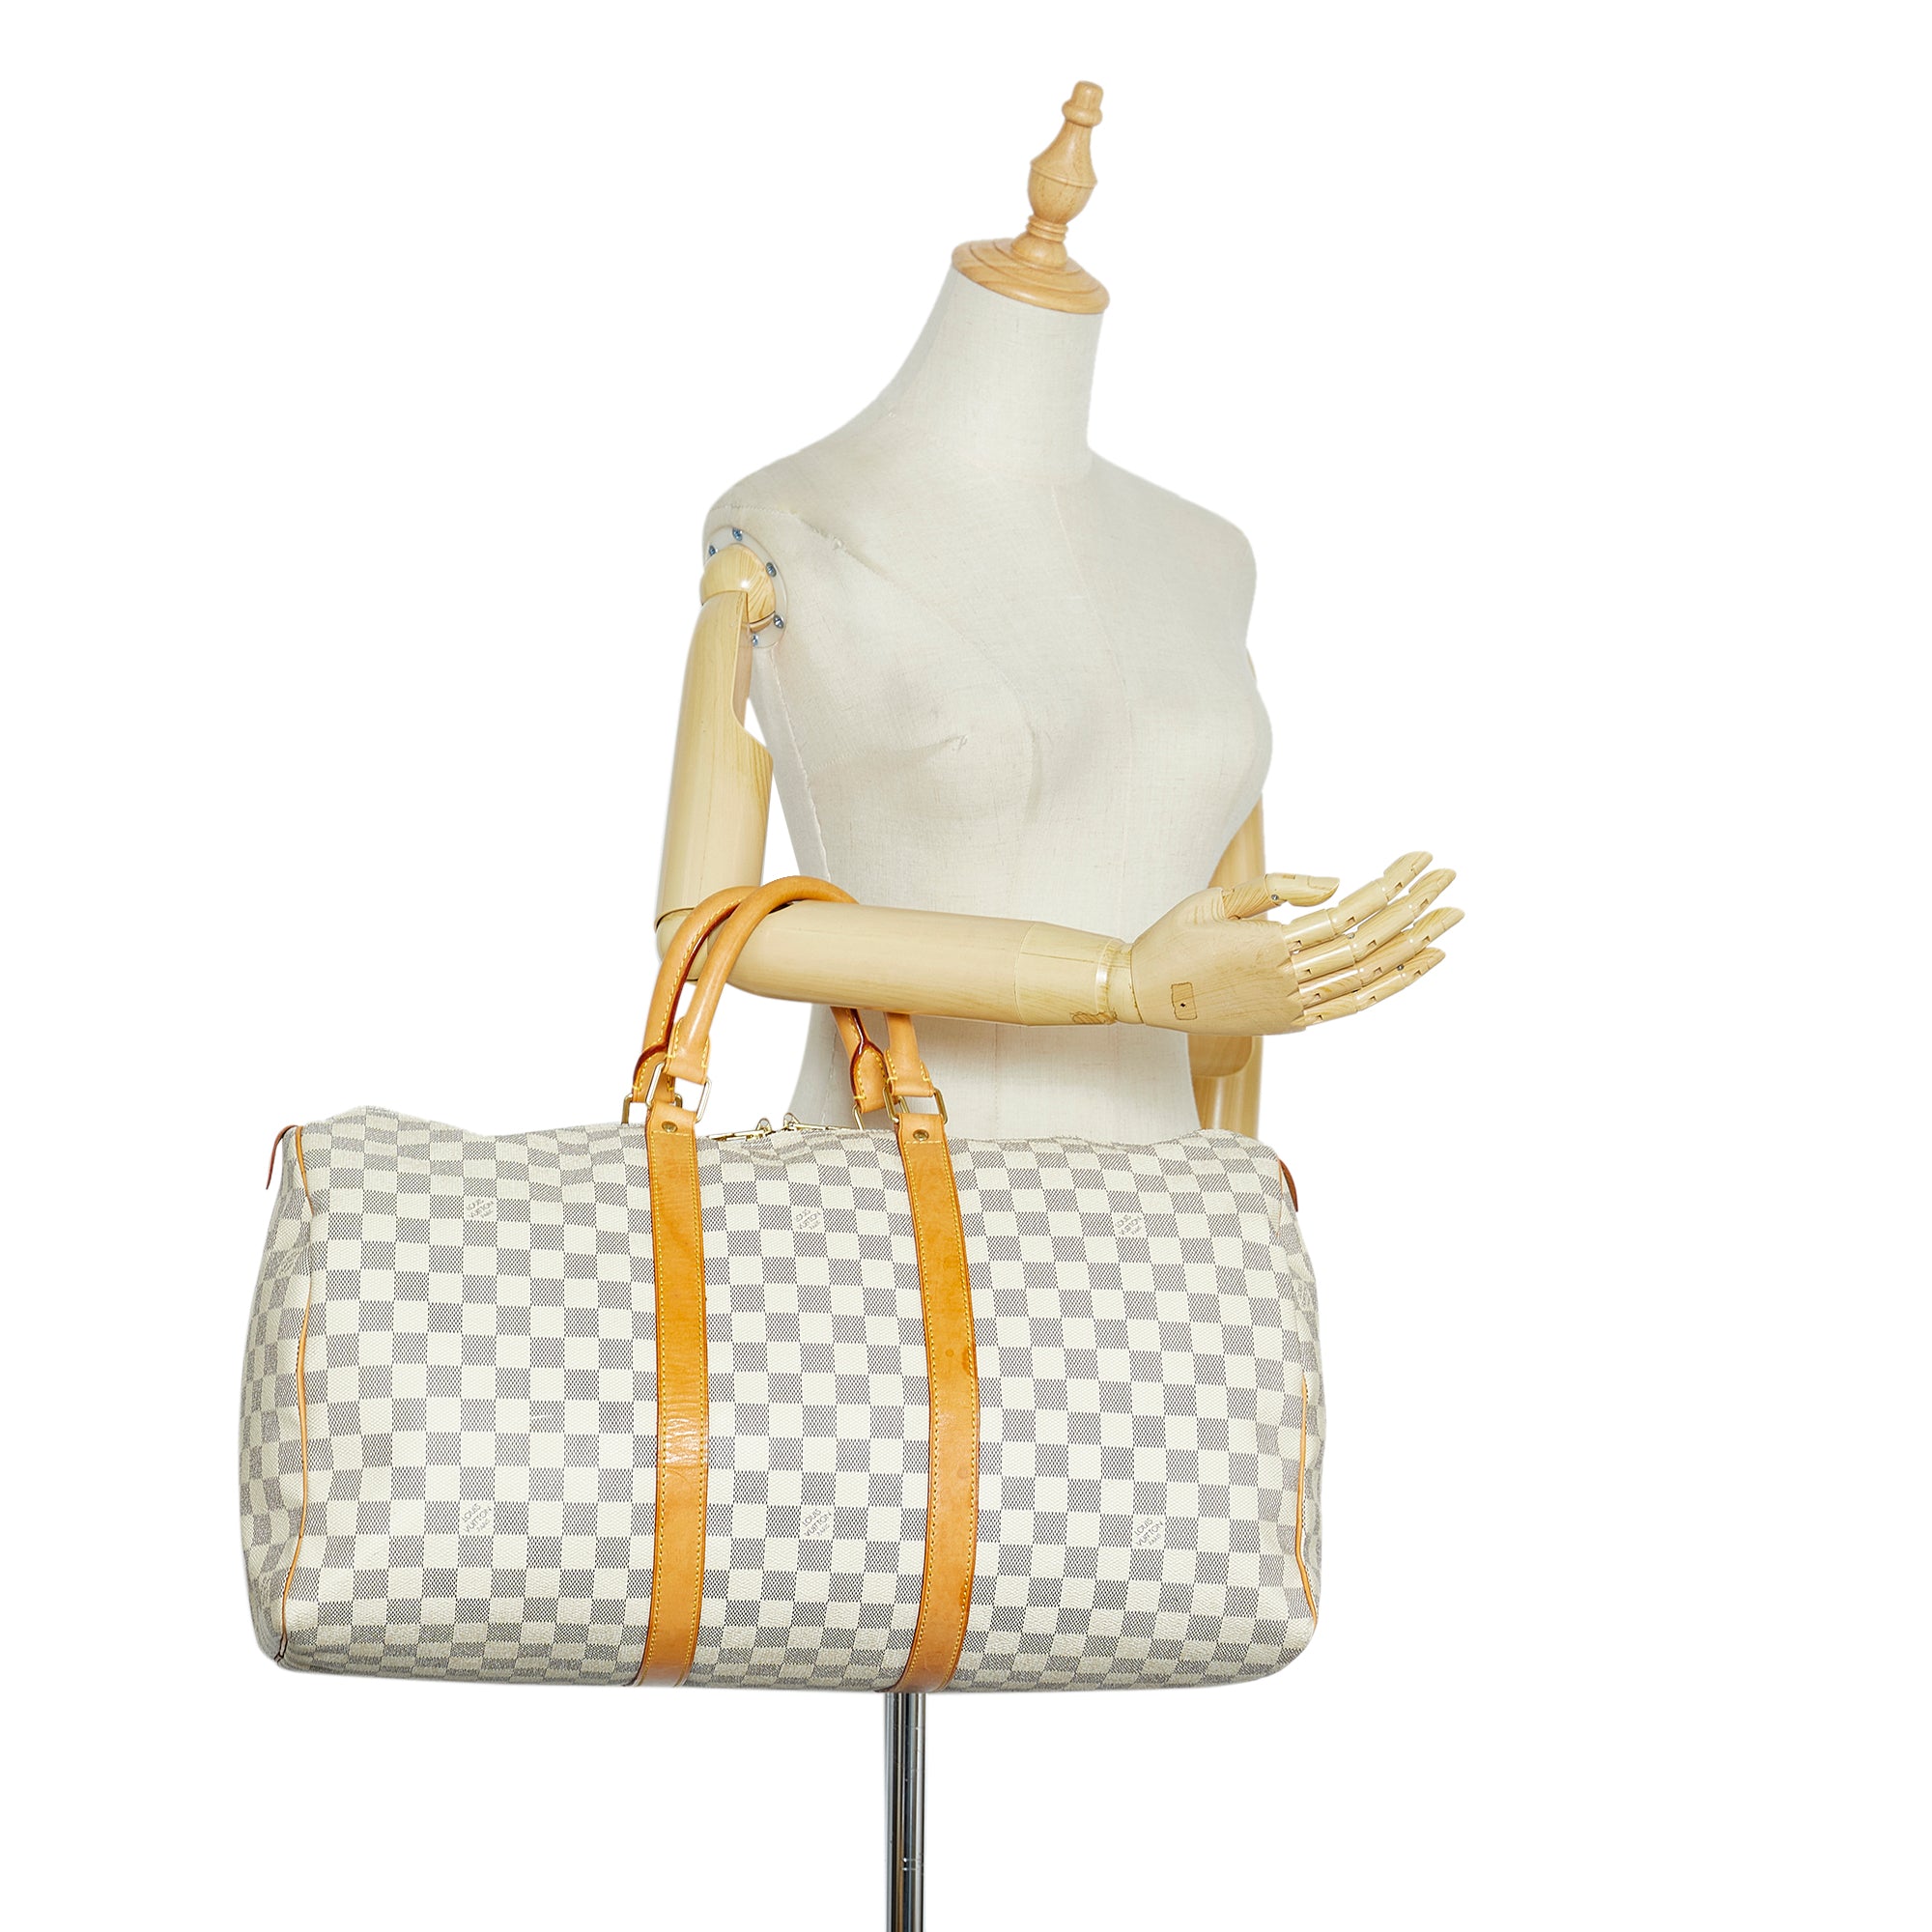 Preowned original Louis Vuitton Keepall 50 Damier Azur Travel Bag